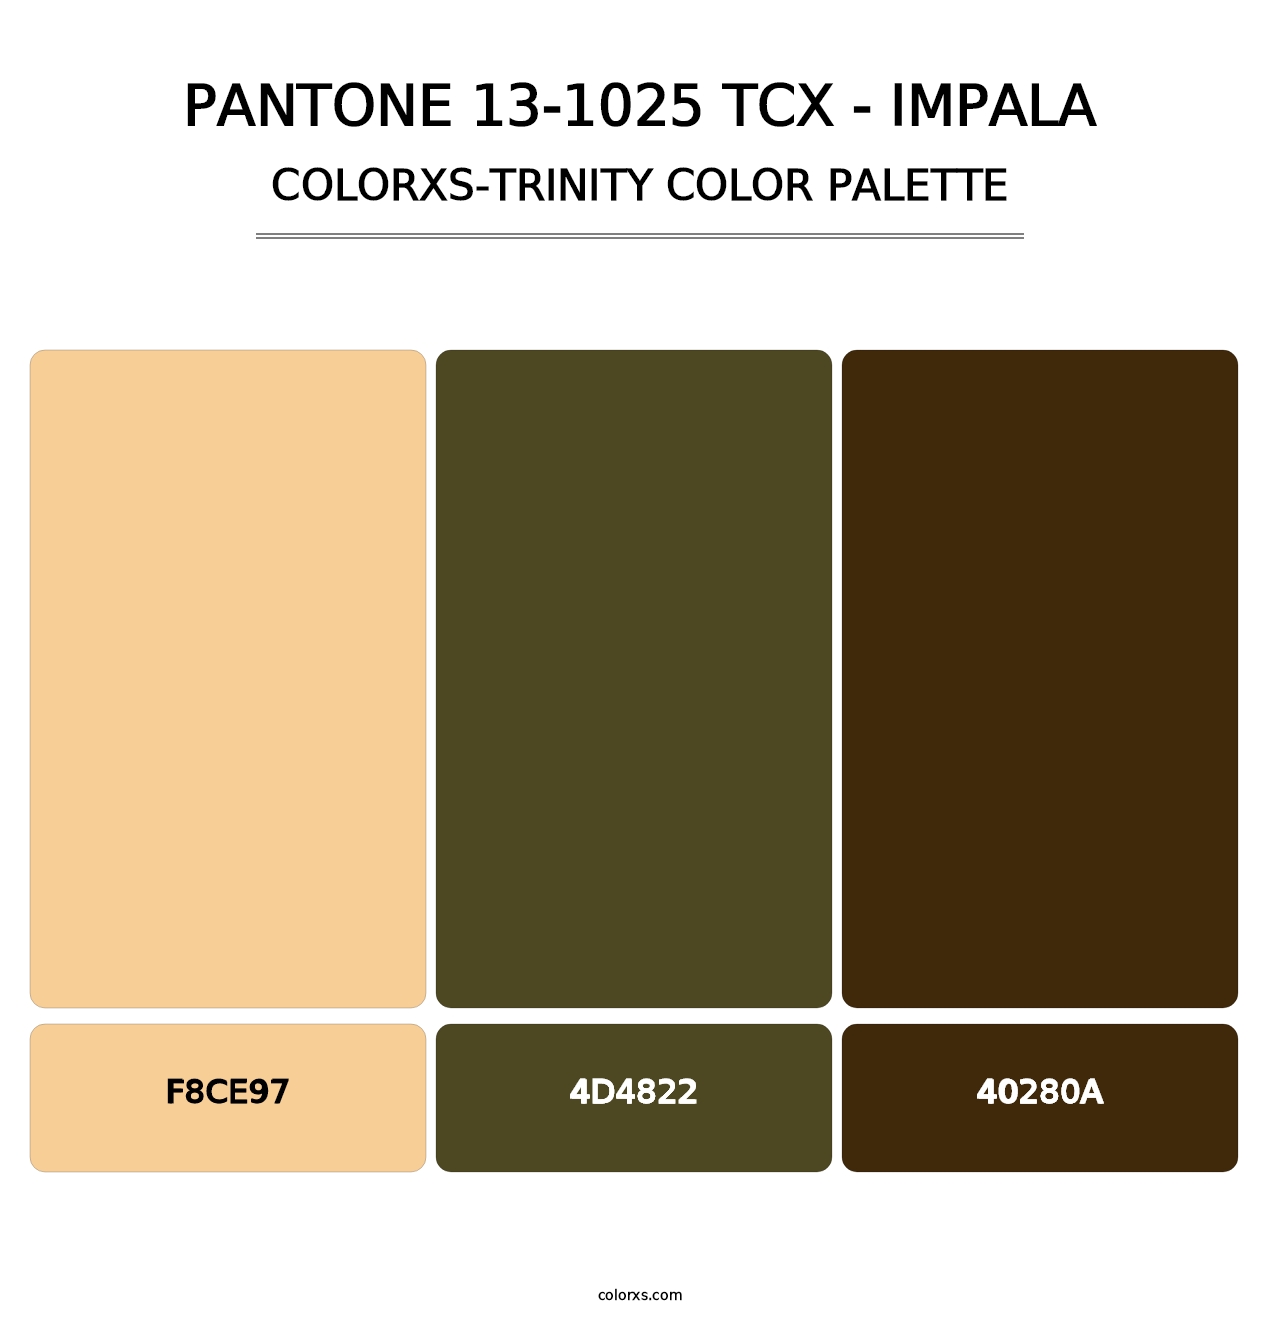 PANTONE 13-1025 TCX - Impala - Colorxs Trinity Palette